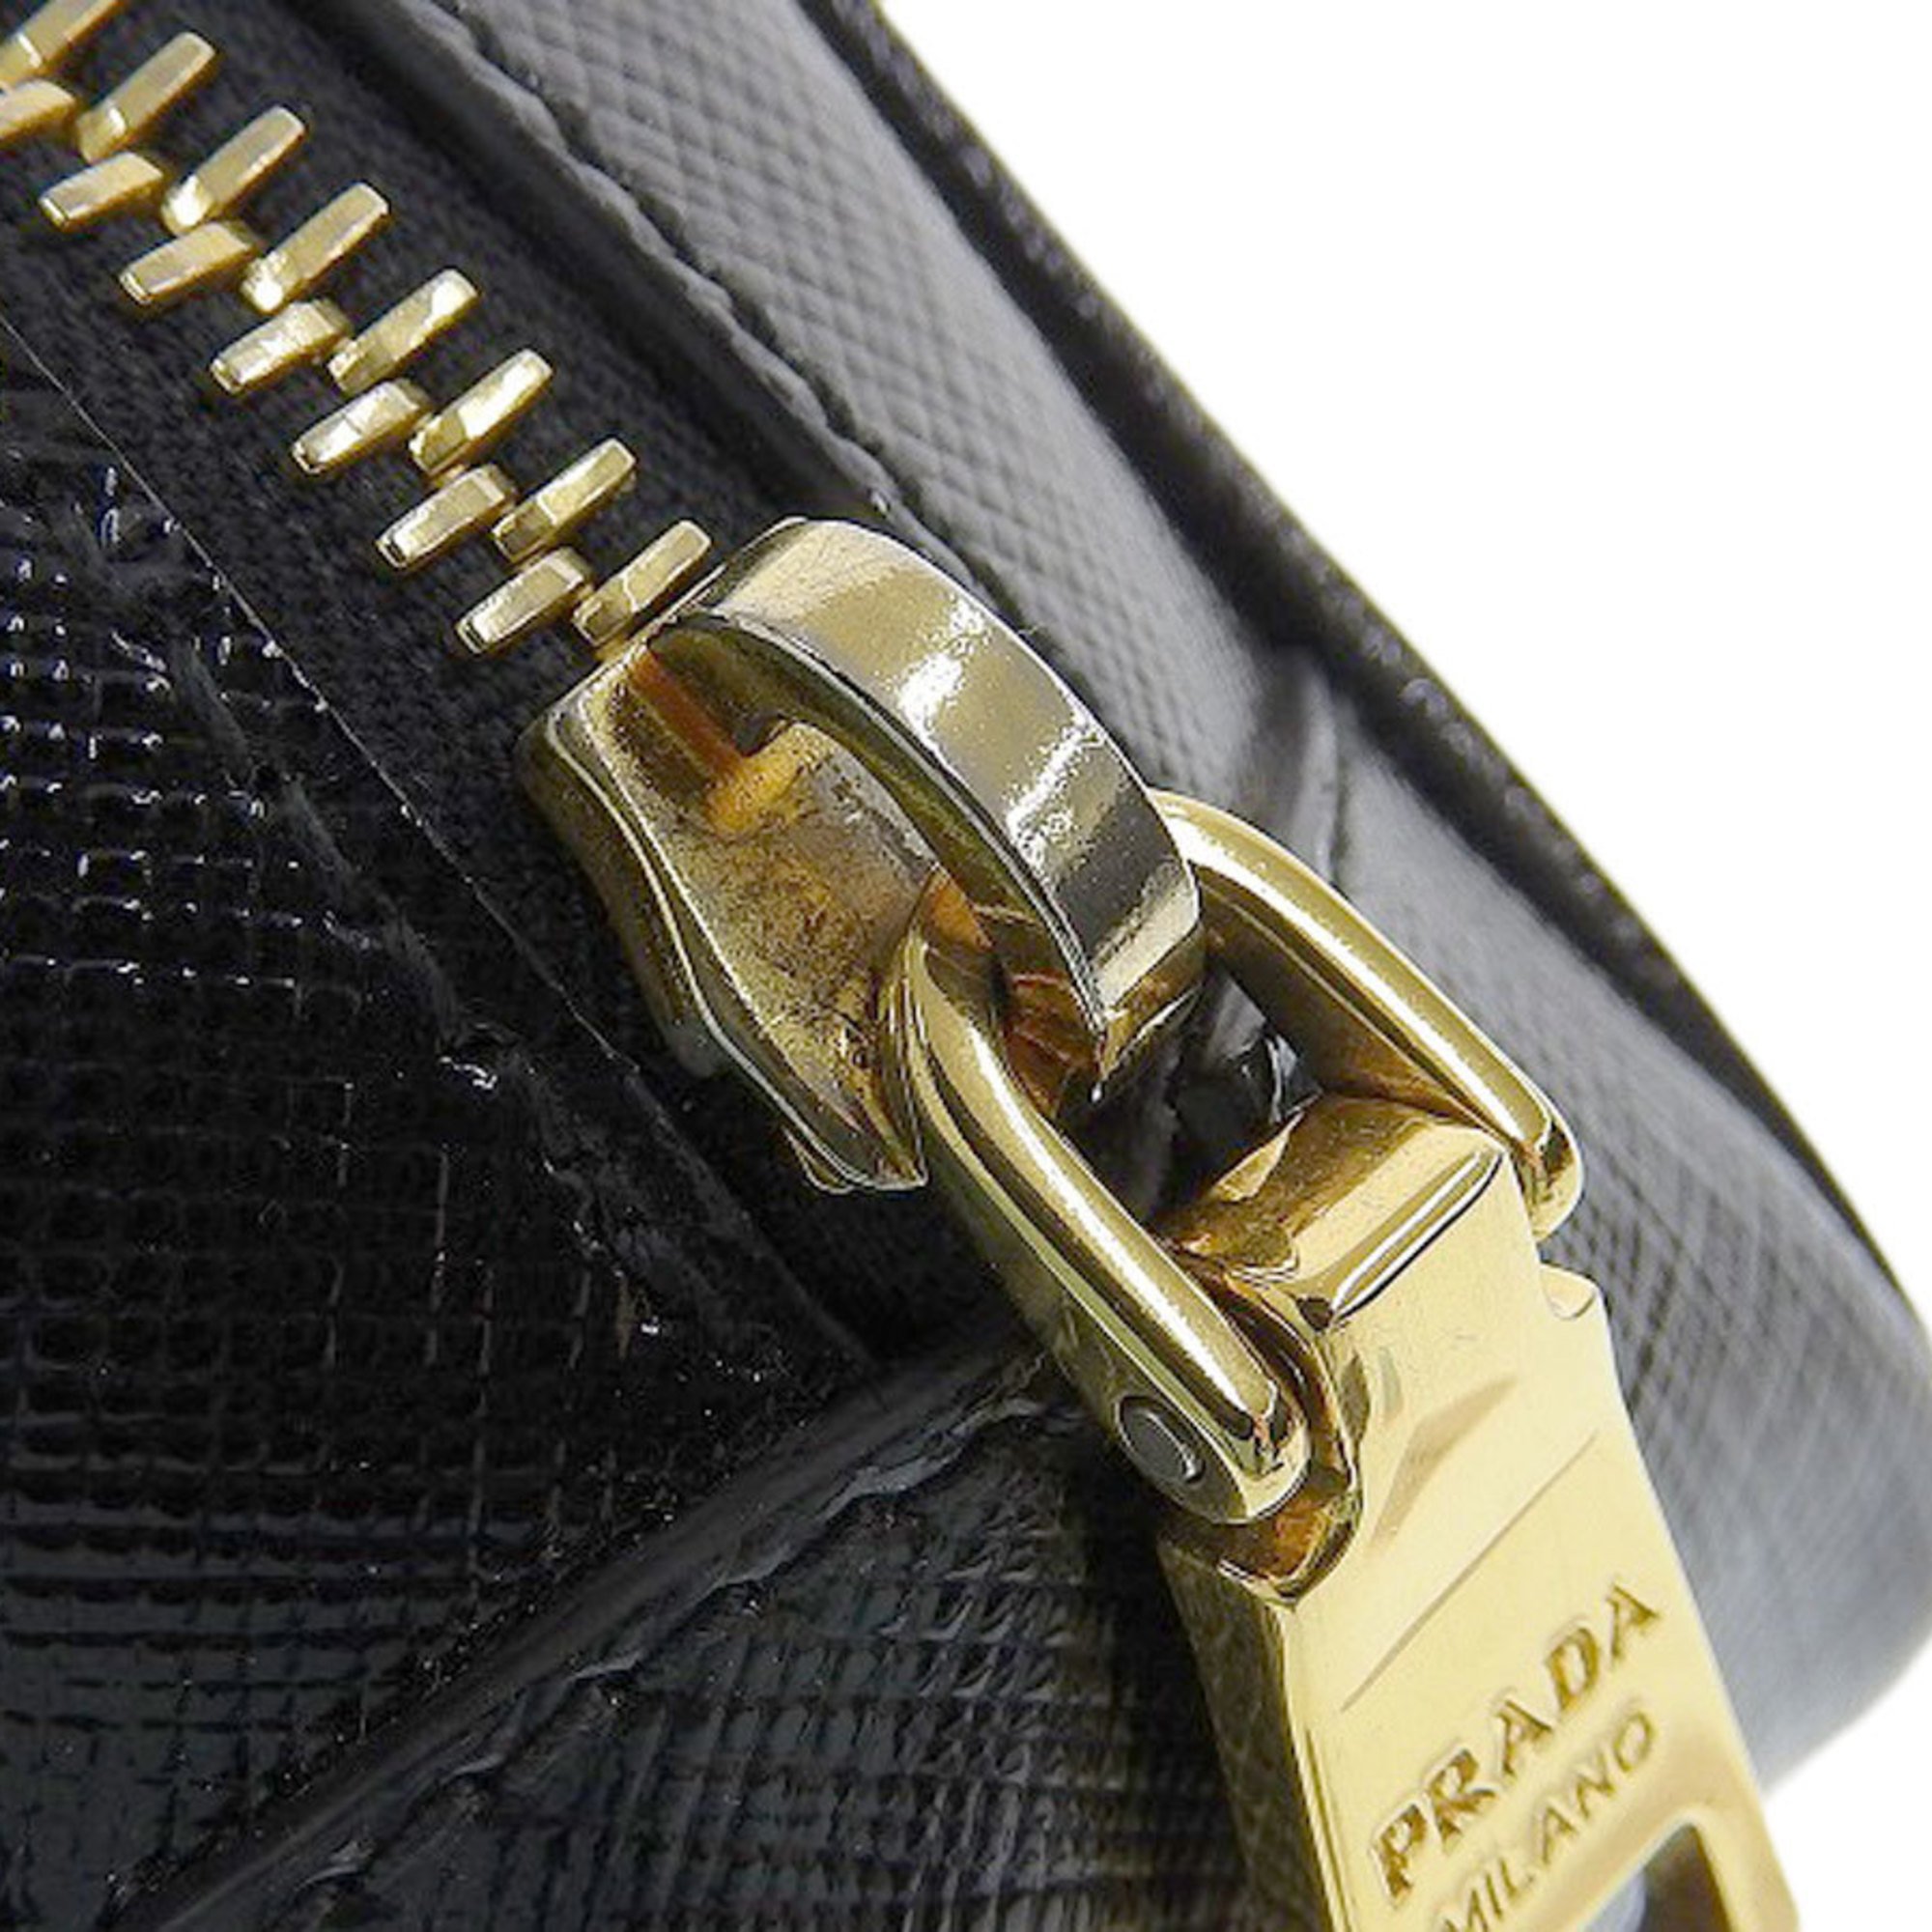 PRADA Prada mini shoulder bag 2WAY Saffiano black gold metal fittings 1N1674 ribbon pouch enamel 20200403